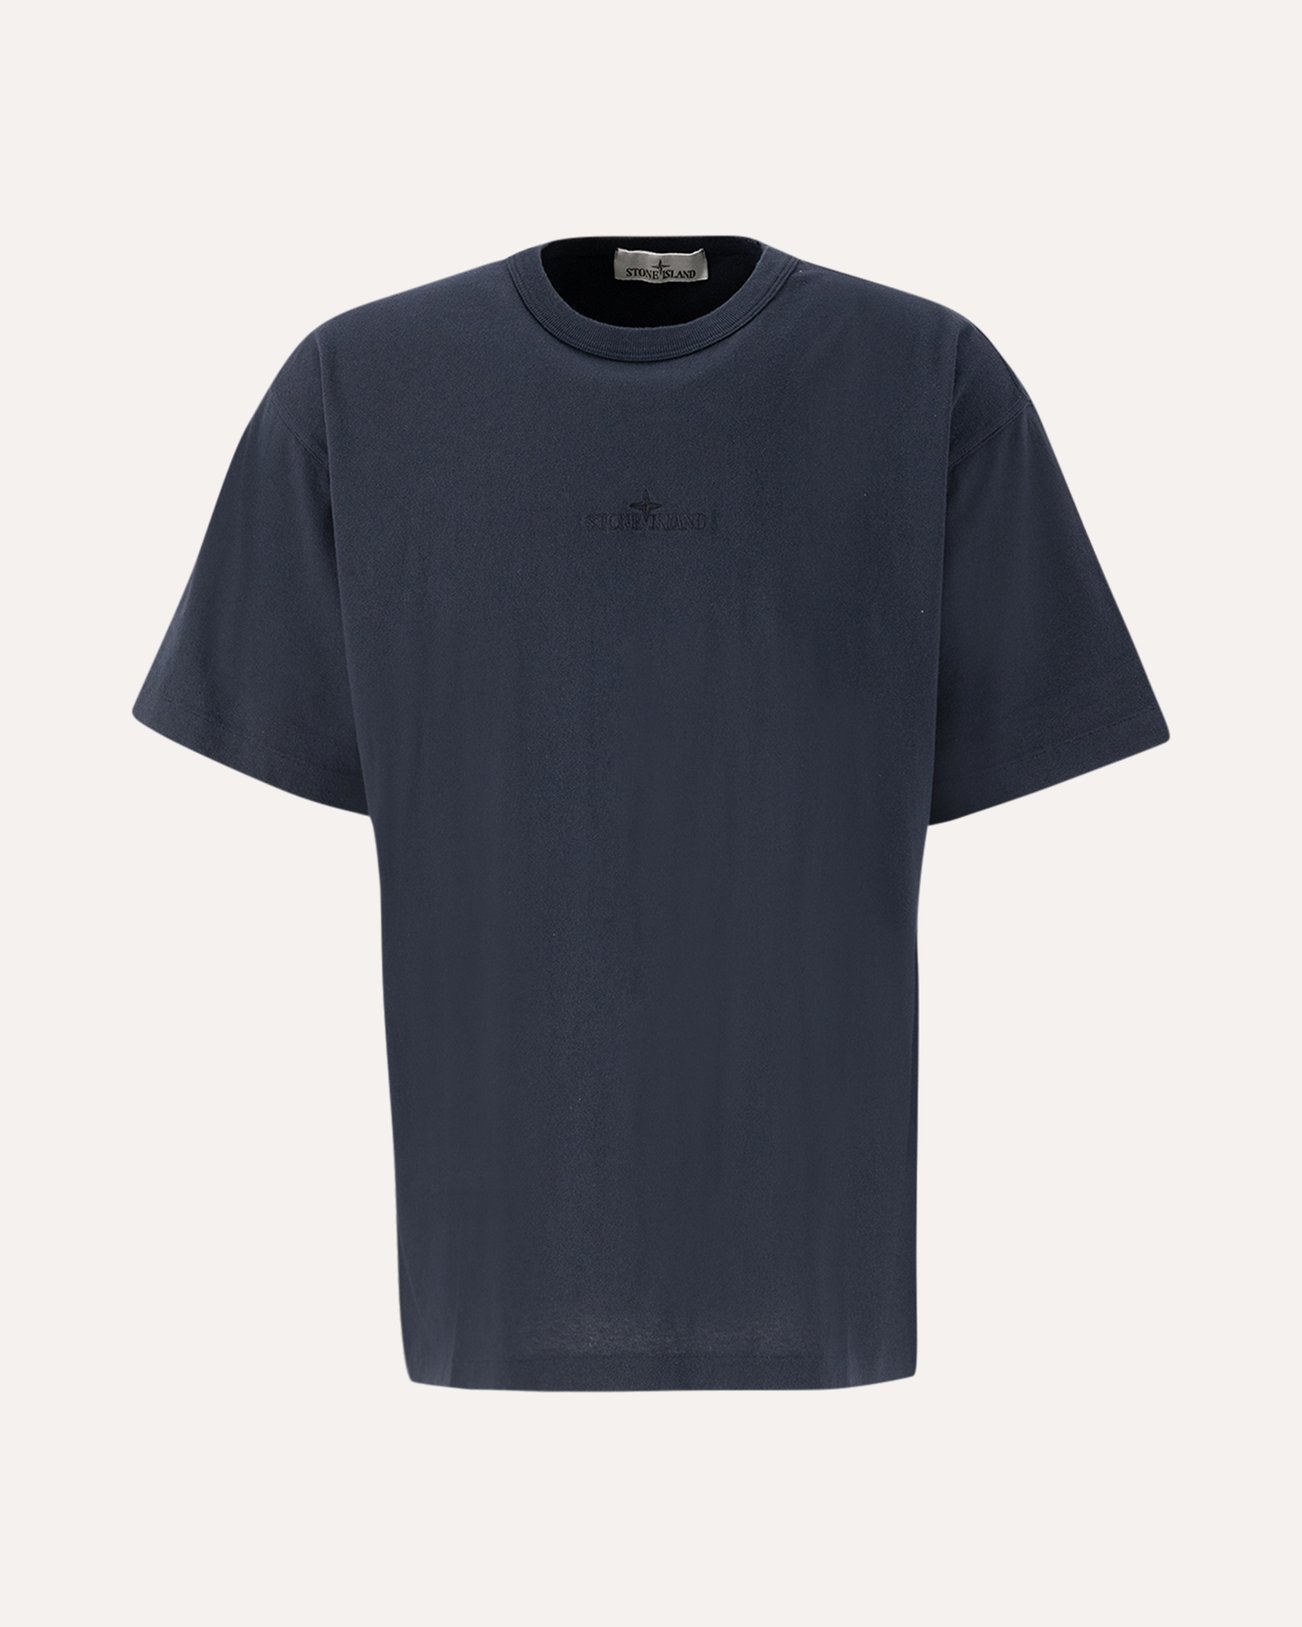 Stone Island 20457 Organic Cotton Garment Dyed 'Fissato' Effect T-Shirt NAVY 1